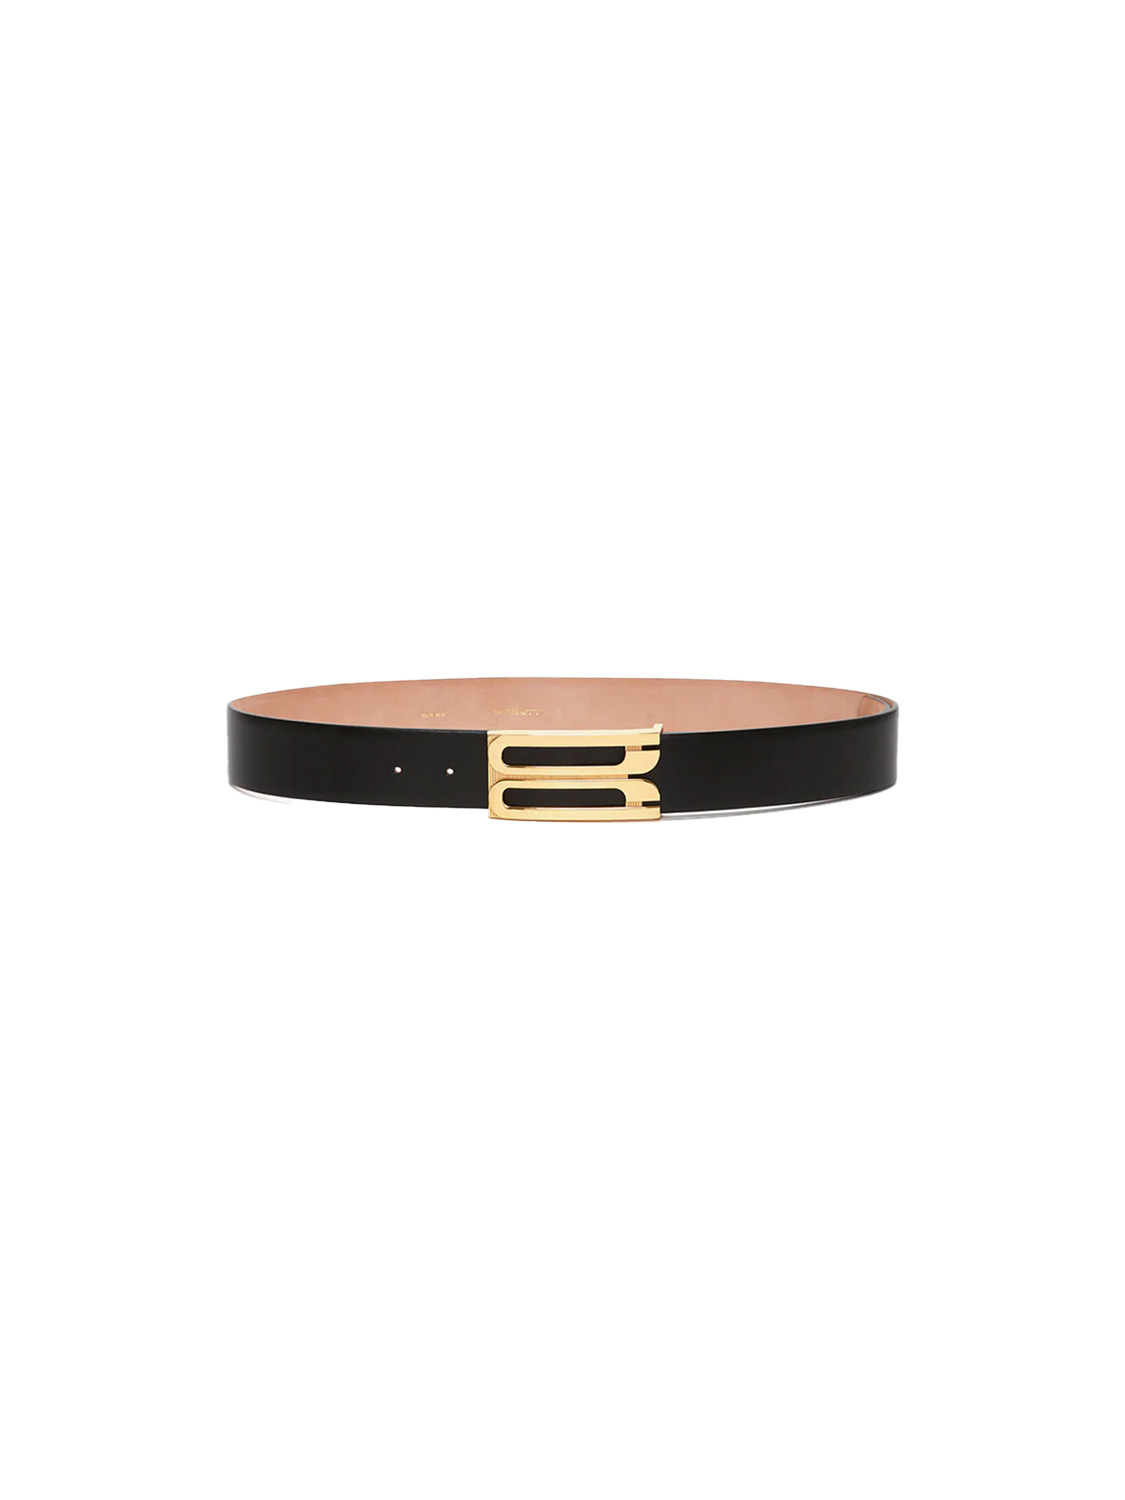 Victoria Beckham Jumbo Frame - Cinturón de piel con hebilla dorada  negro S